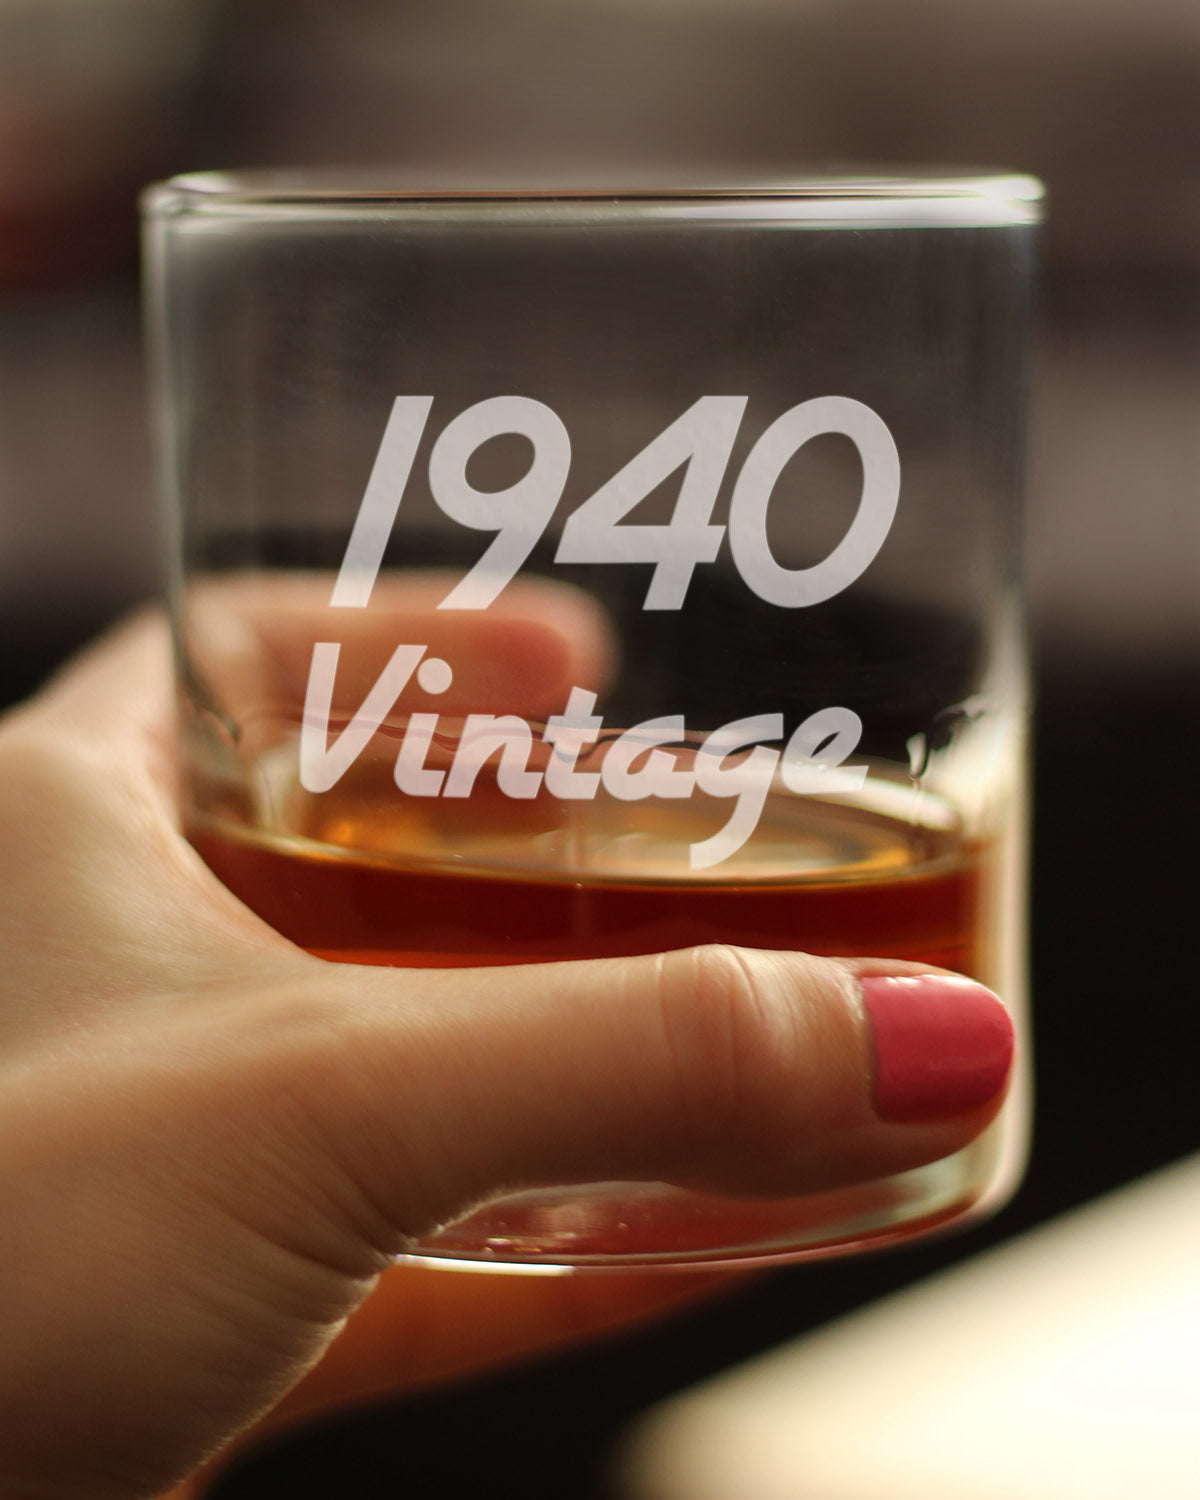 Vintage 1940 - Fun 83rd Birthday Whiskey Rocks Glass Gifts for Men &amp; Women Turning 83 - Retro Whisky Drinking Tumbler